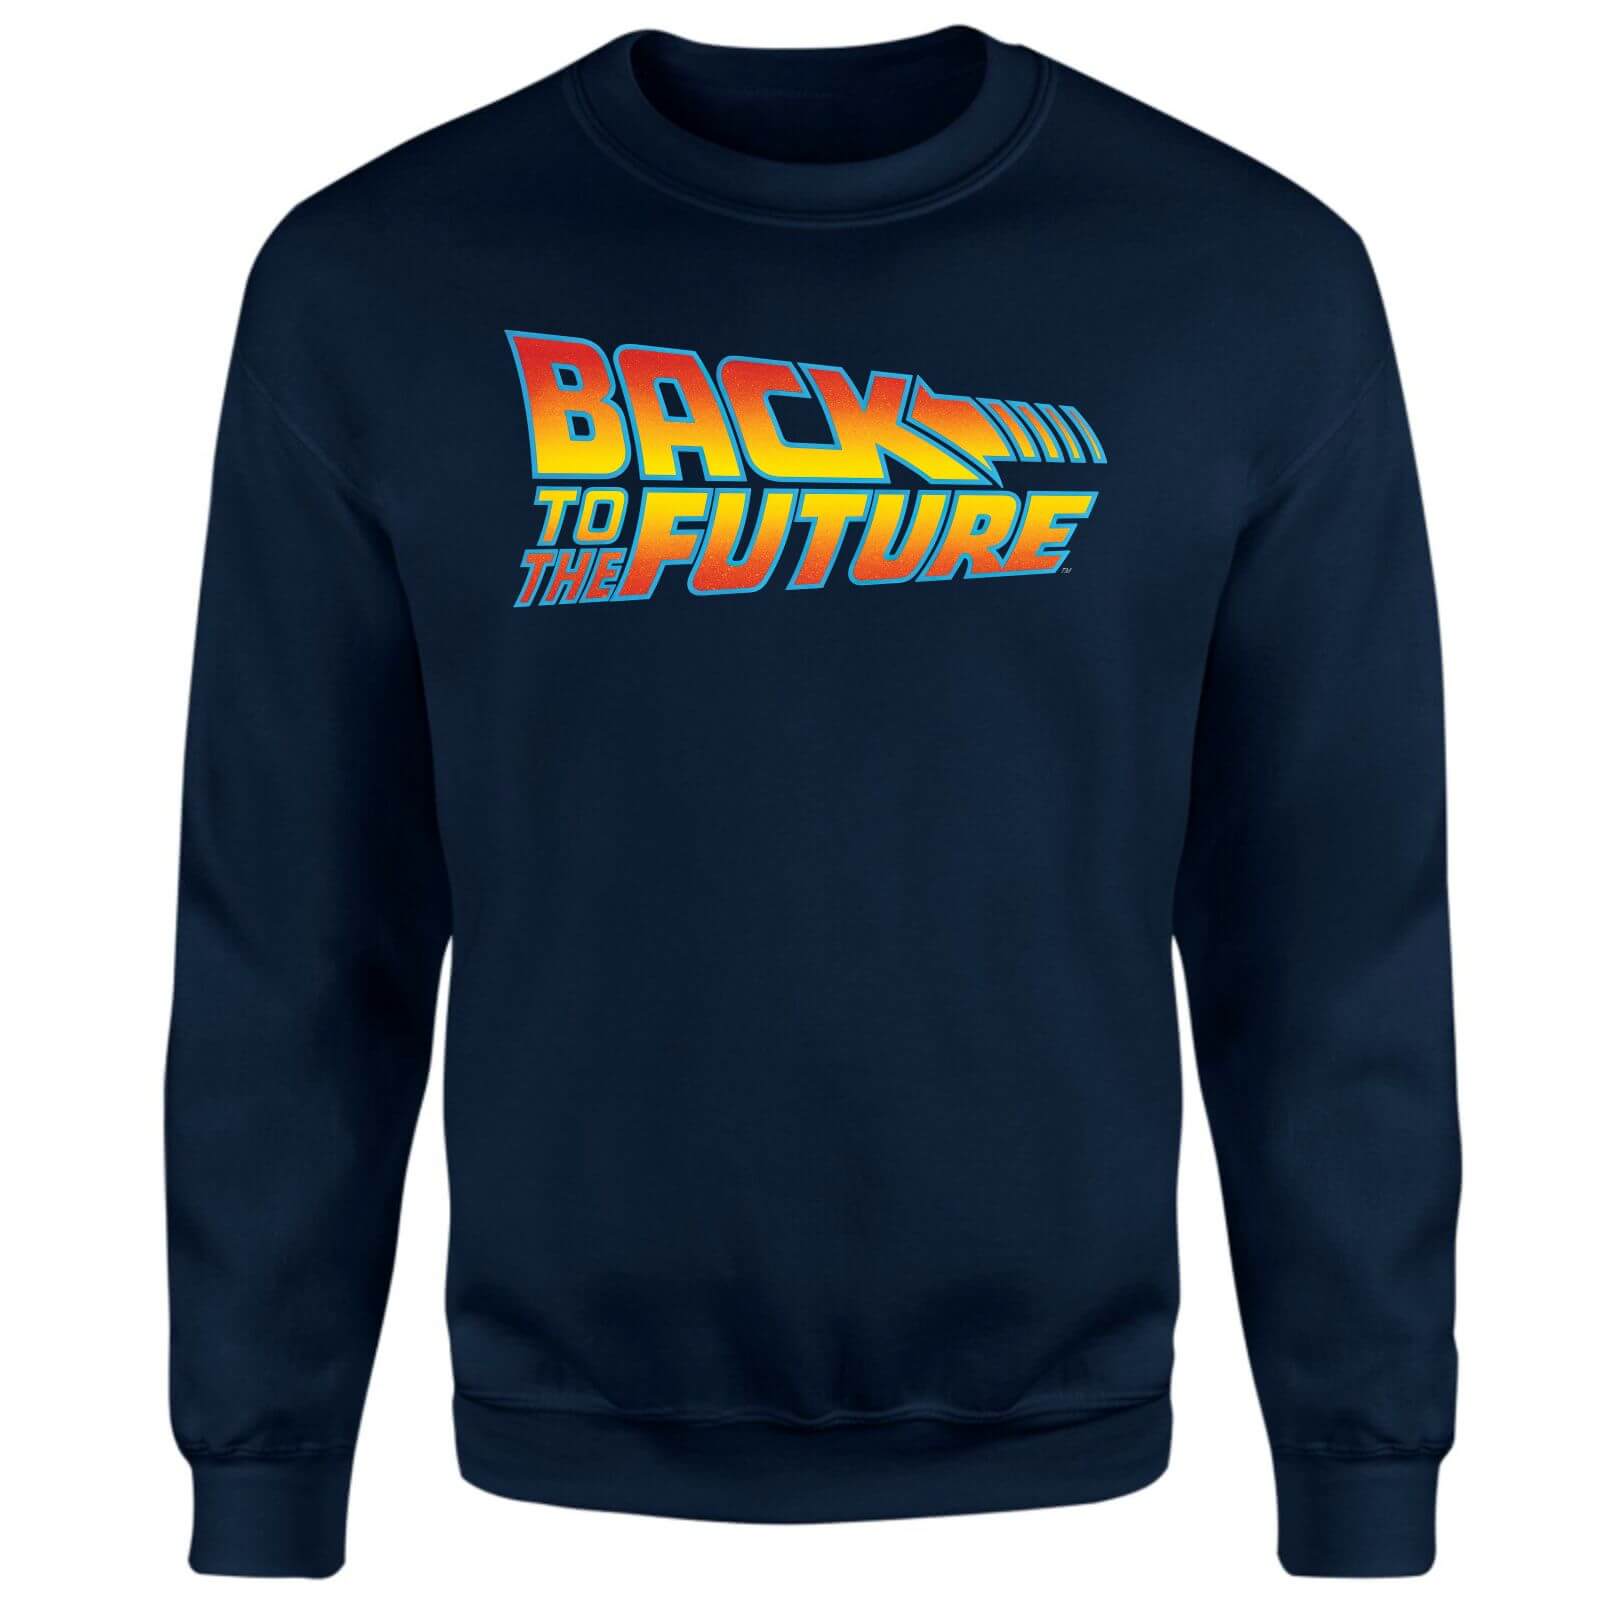 Back To The Future Classic Logo Sweatshirt - Navy - XS - Navy